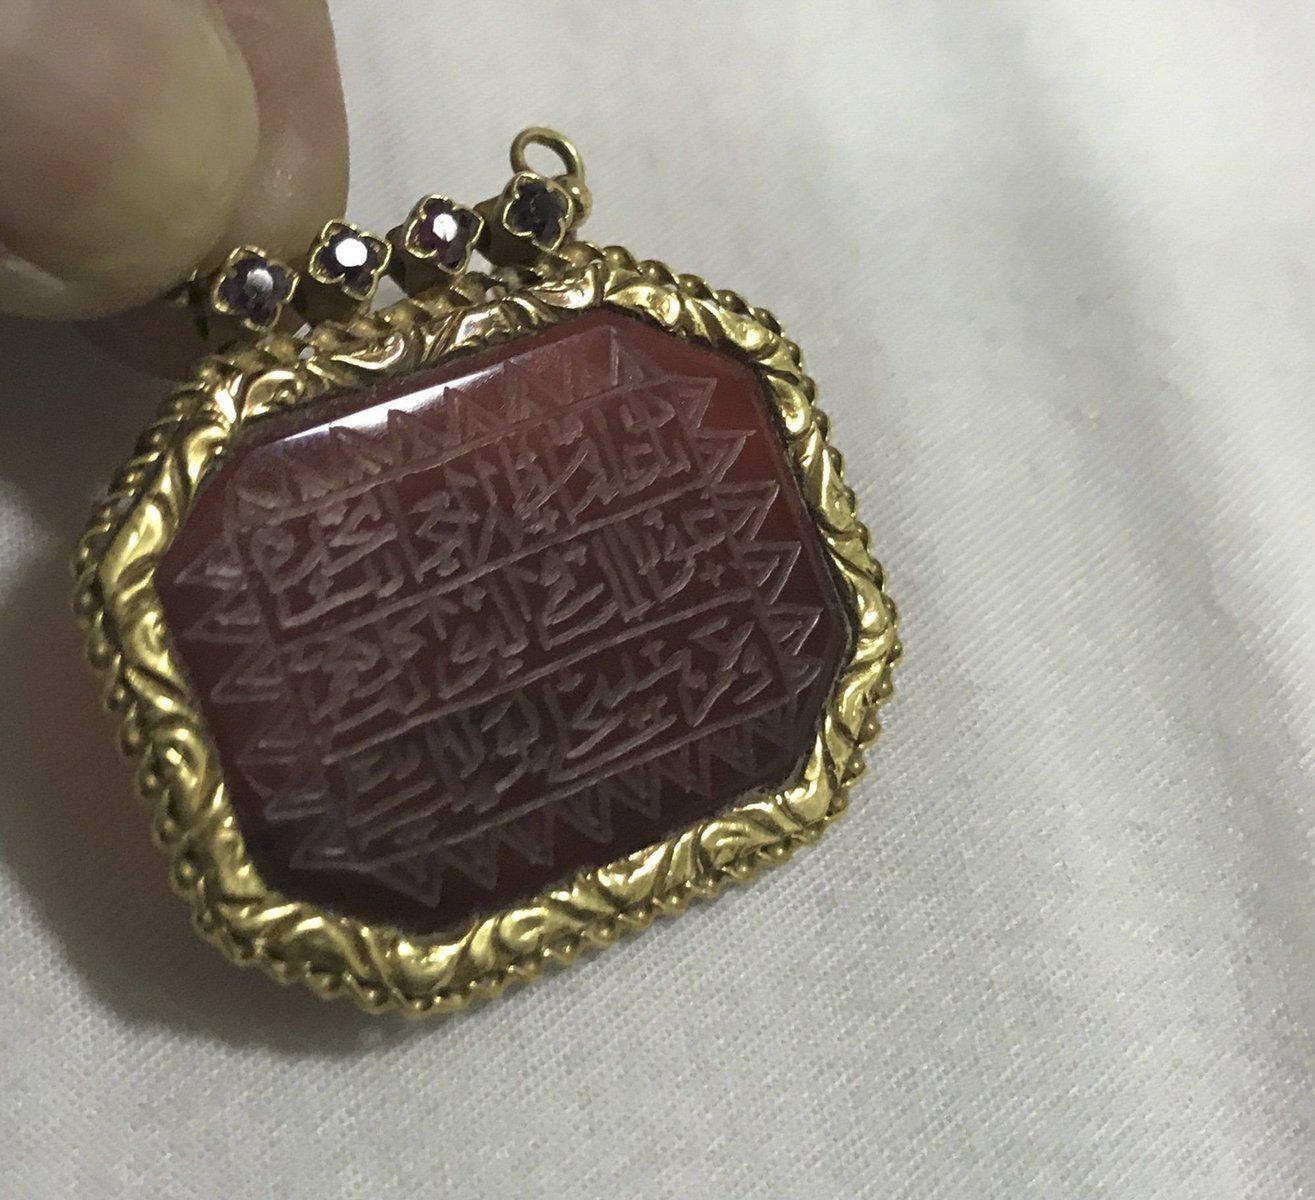 1169 SOLD Agate Pendant with Inscription with Gold Casing-WOVENSOULS-Antique-Vintage-Textiles-Art-Decor